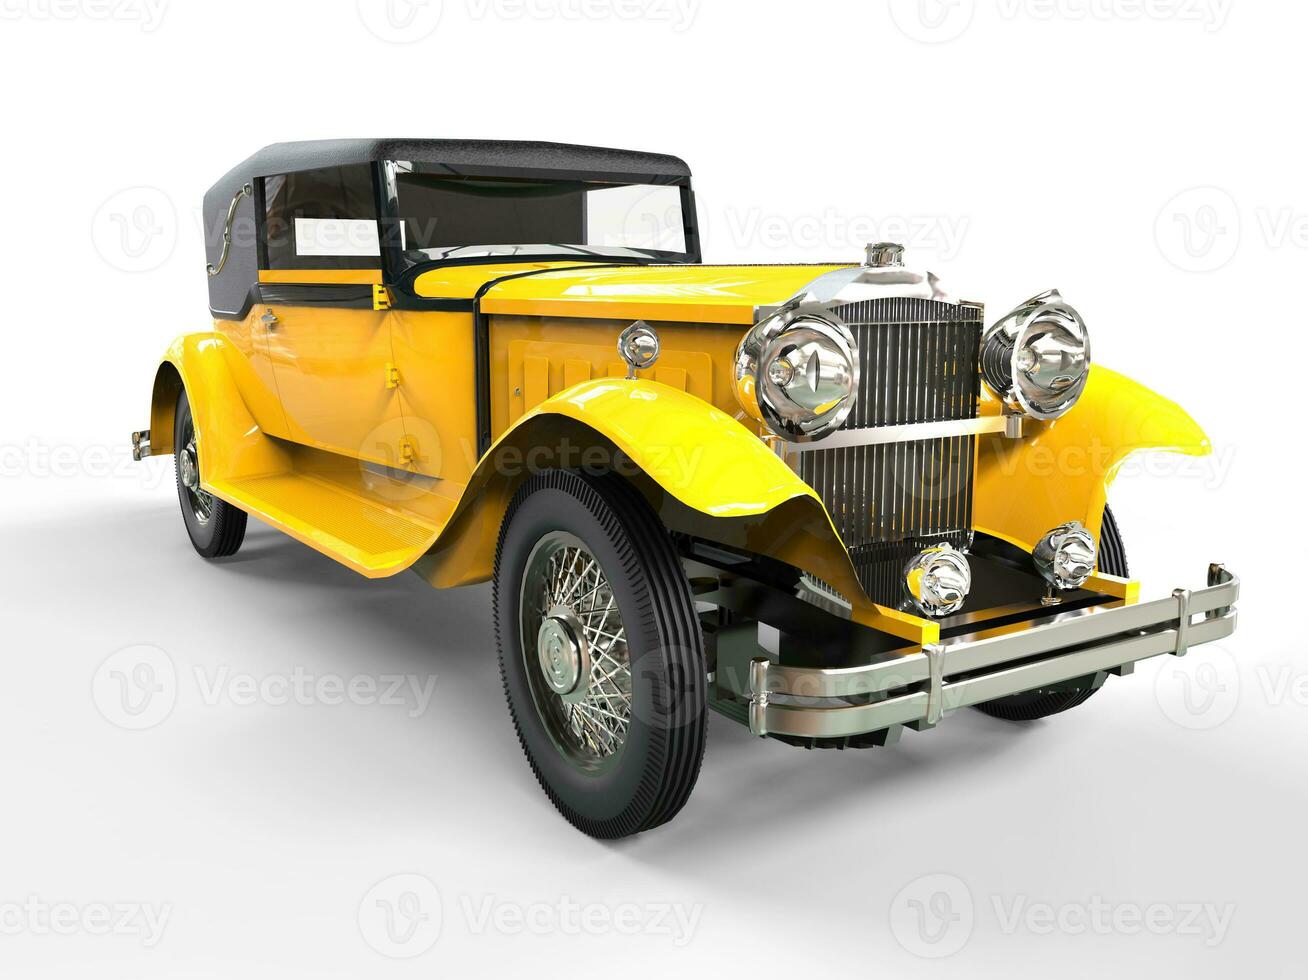 Cool yellow vintage car photo